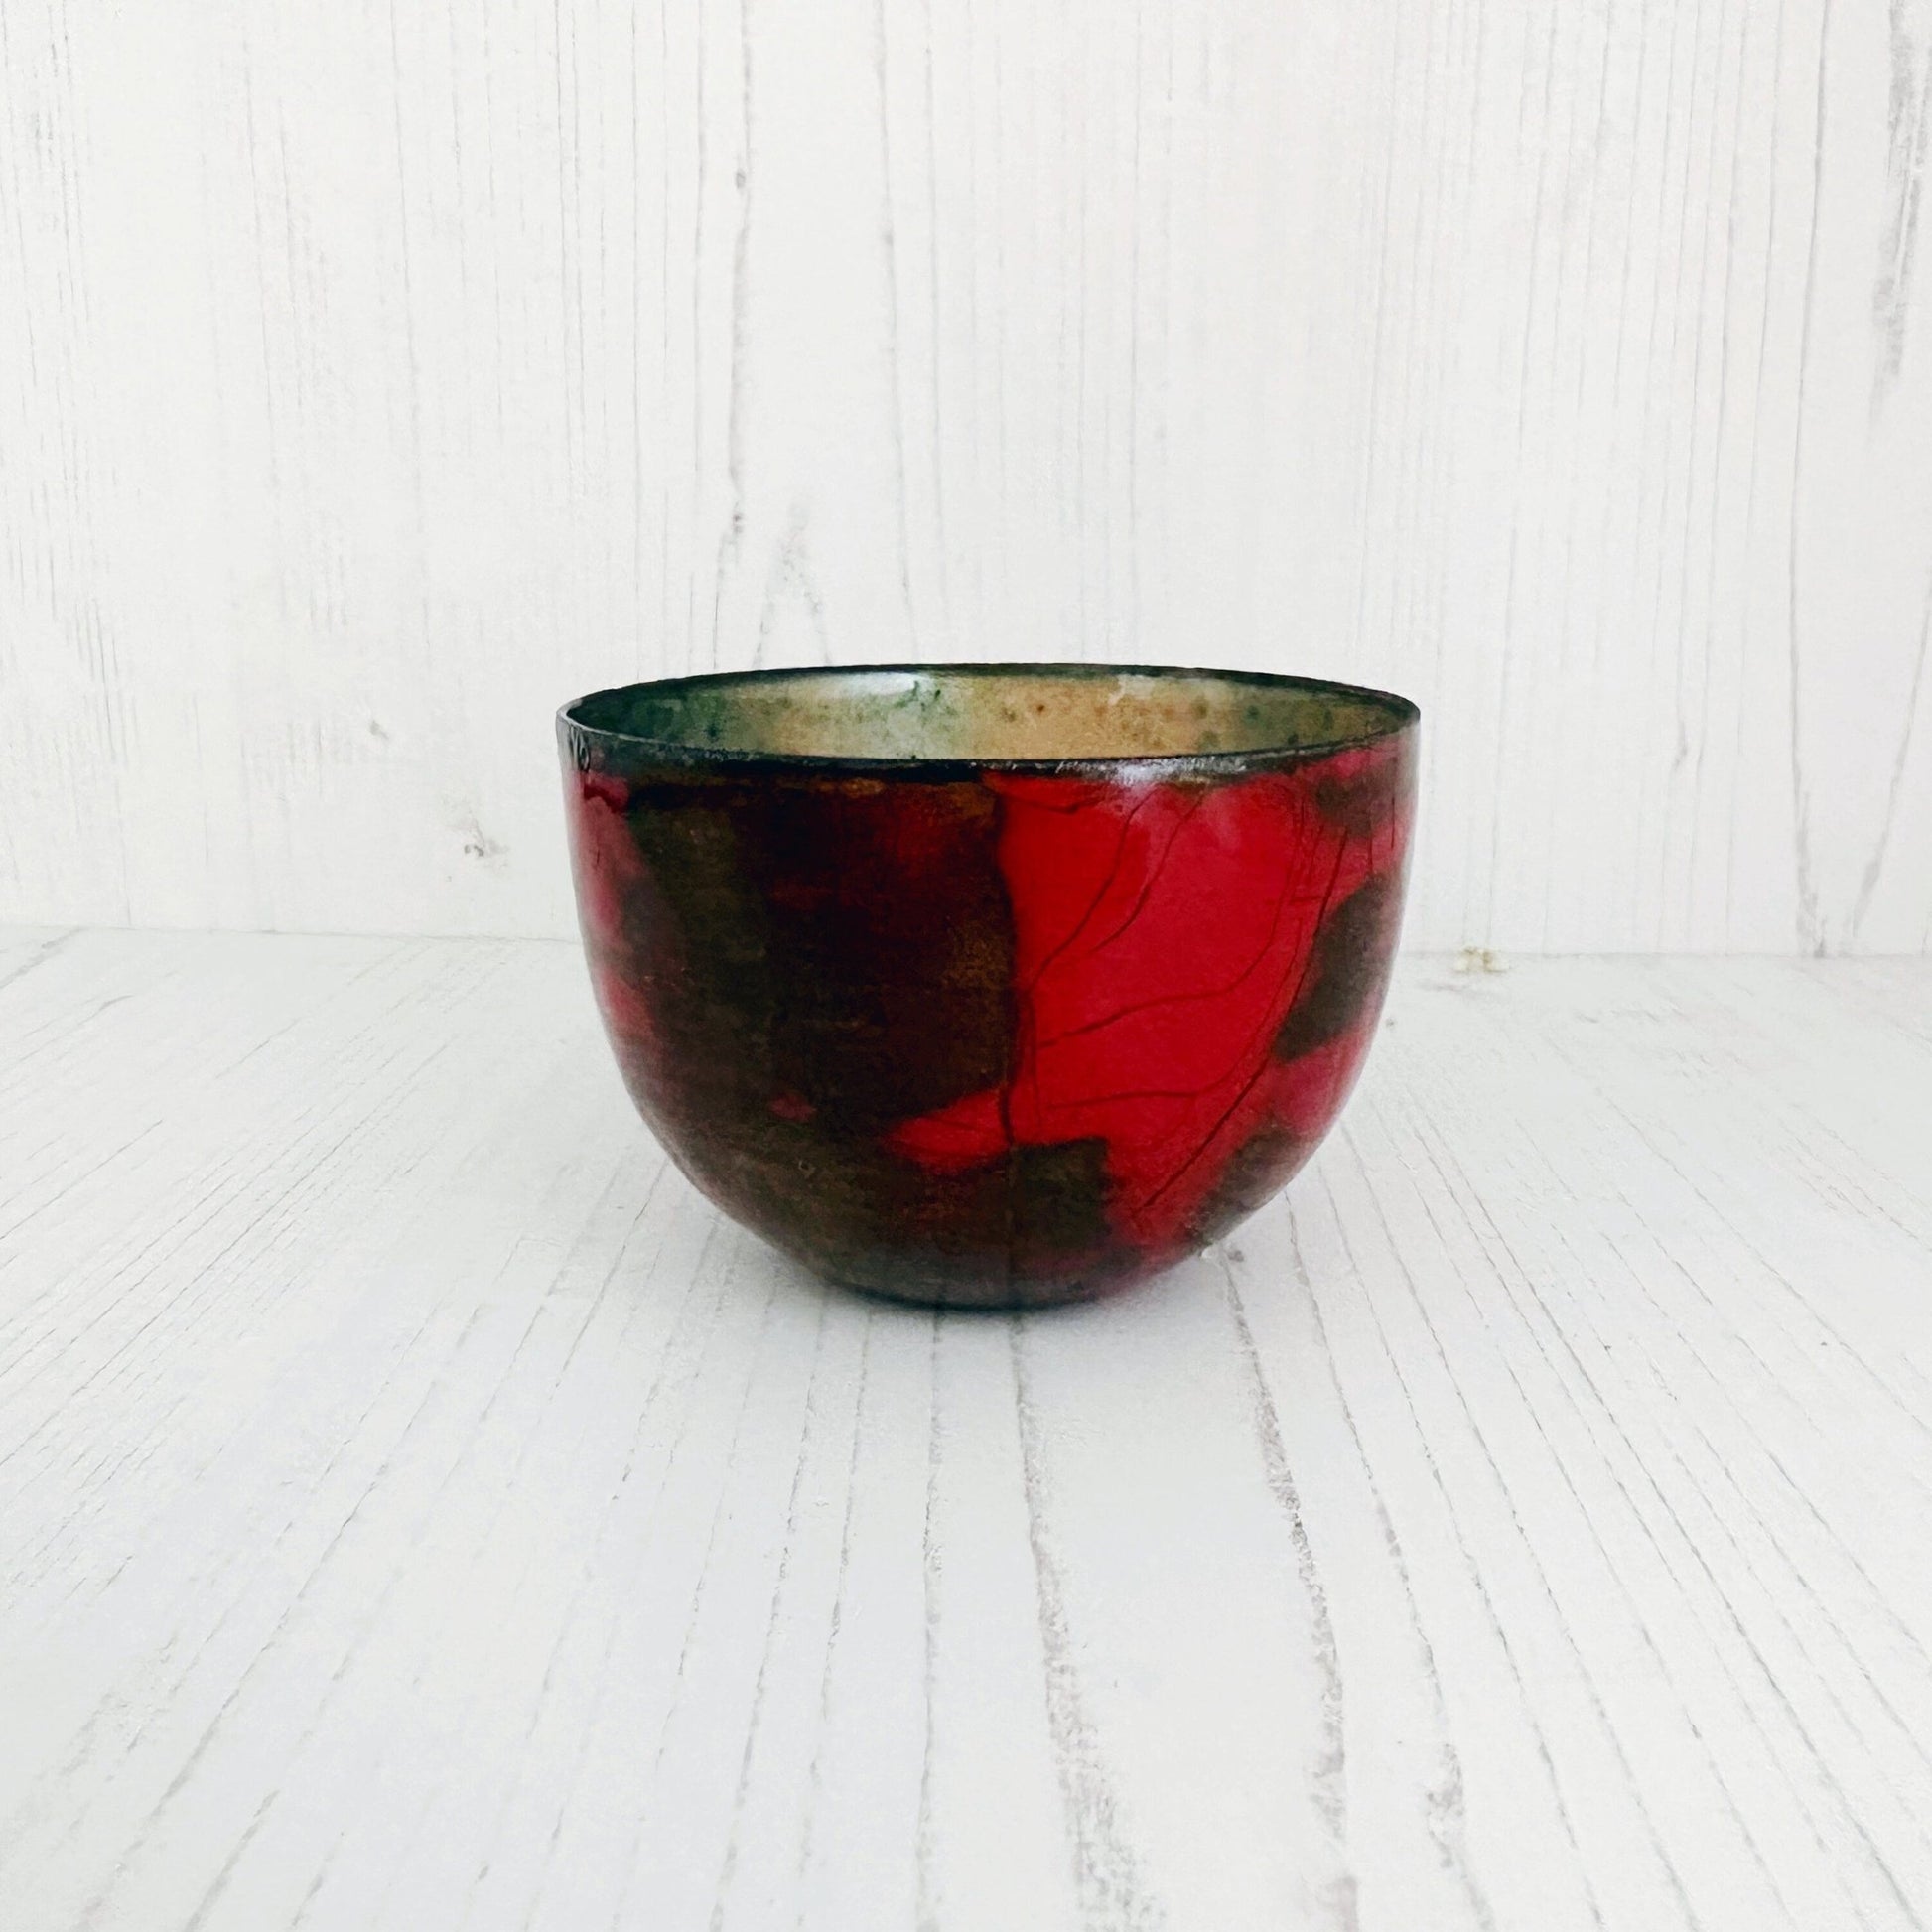 Red Enamel Bowl - Home Decor - Decorative Bowl - New Home Gift Idea - MaisyPlum